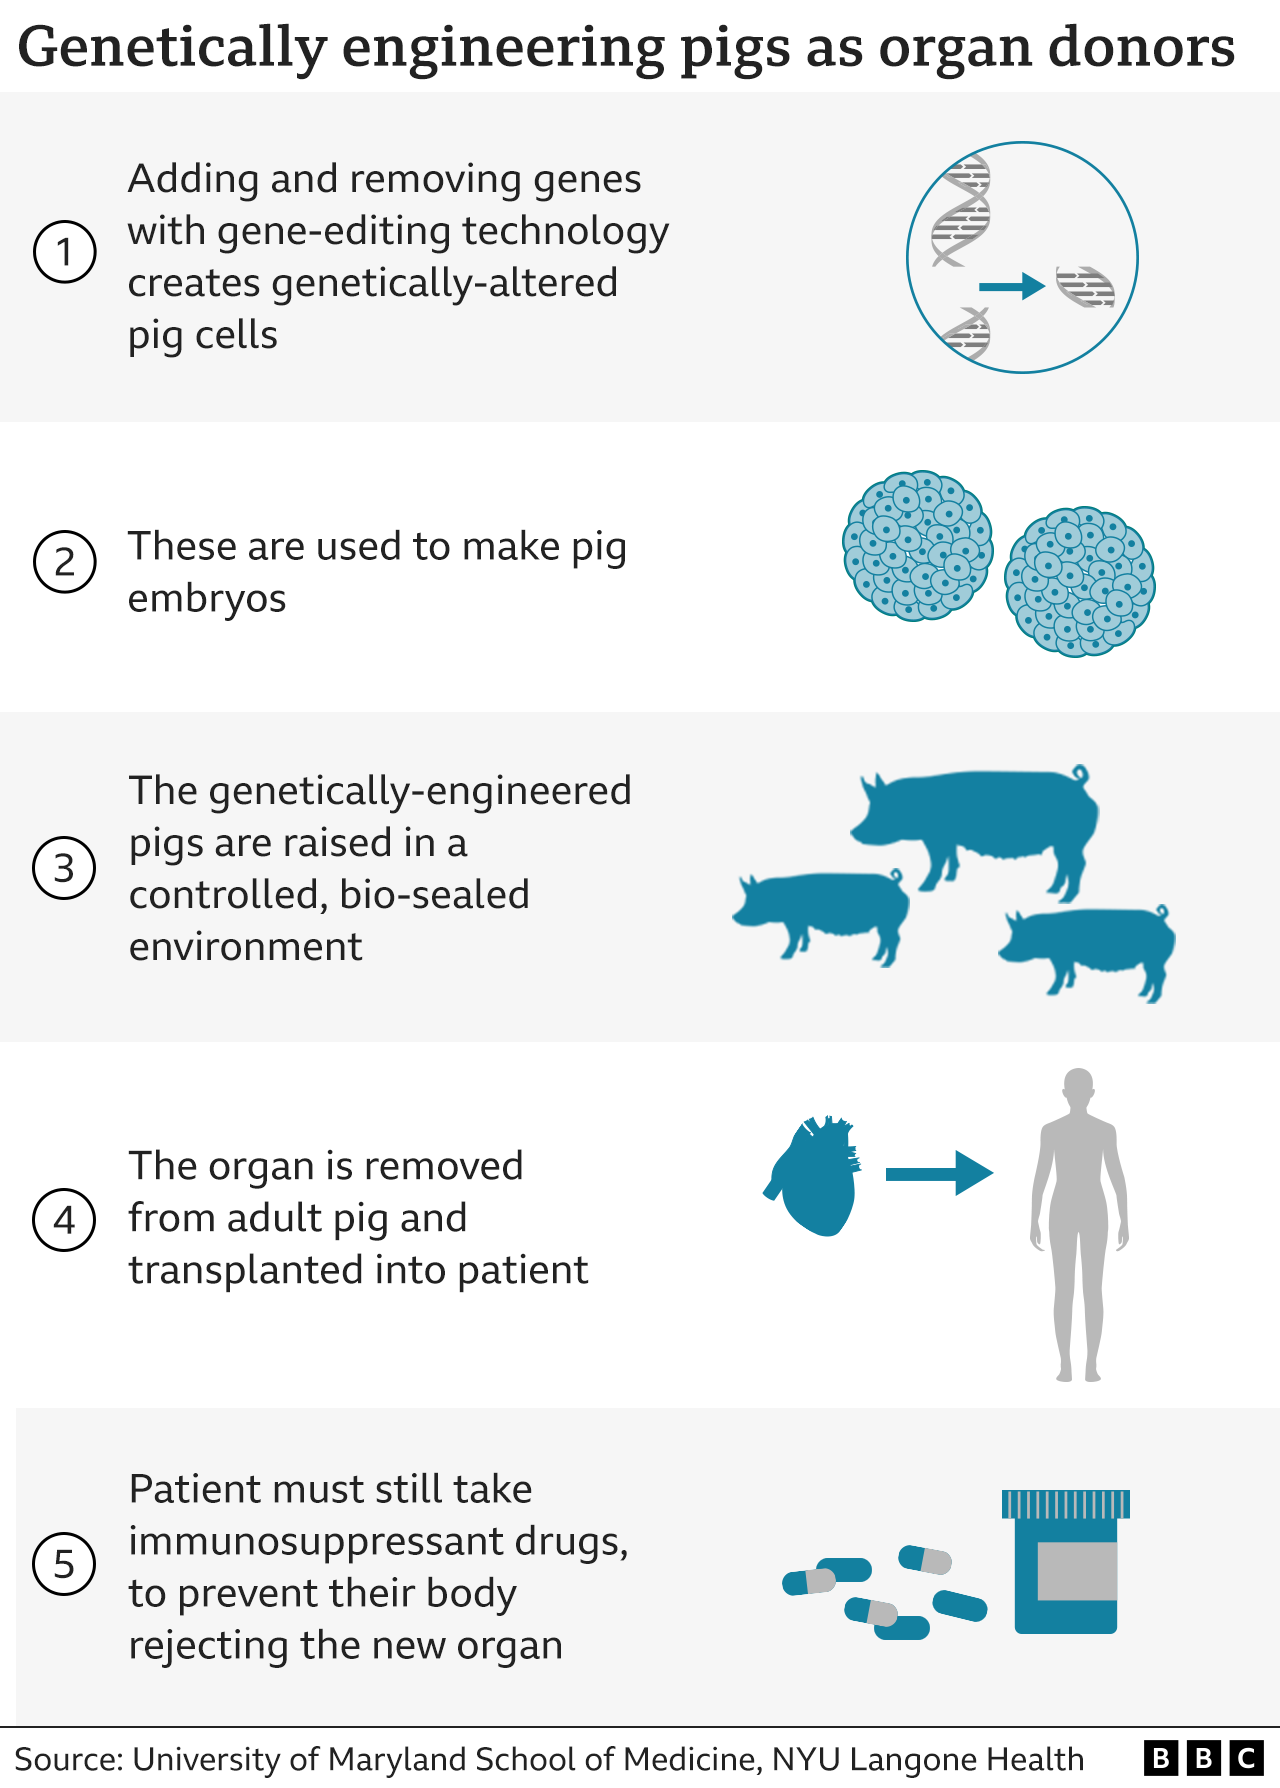 Xenotransplantation: Are pigs the future of organ transplants? - BBC News